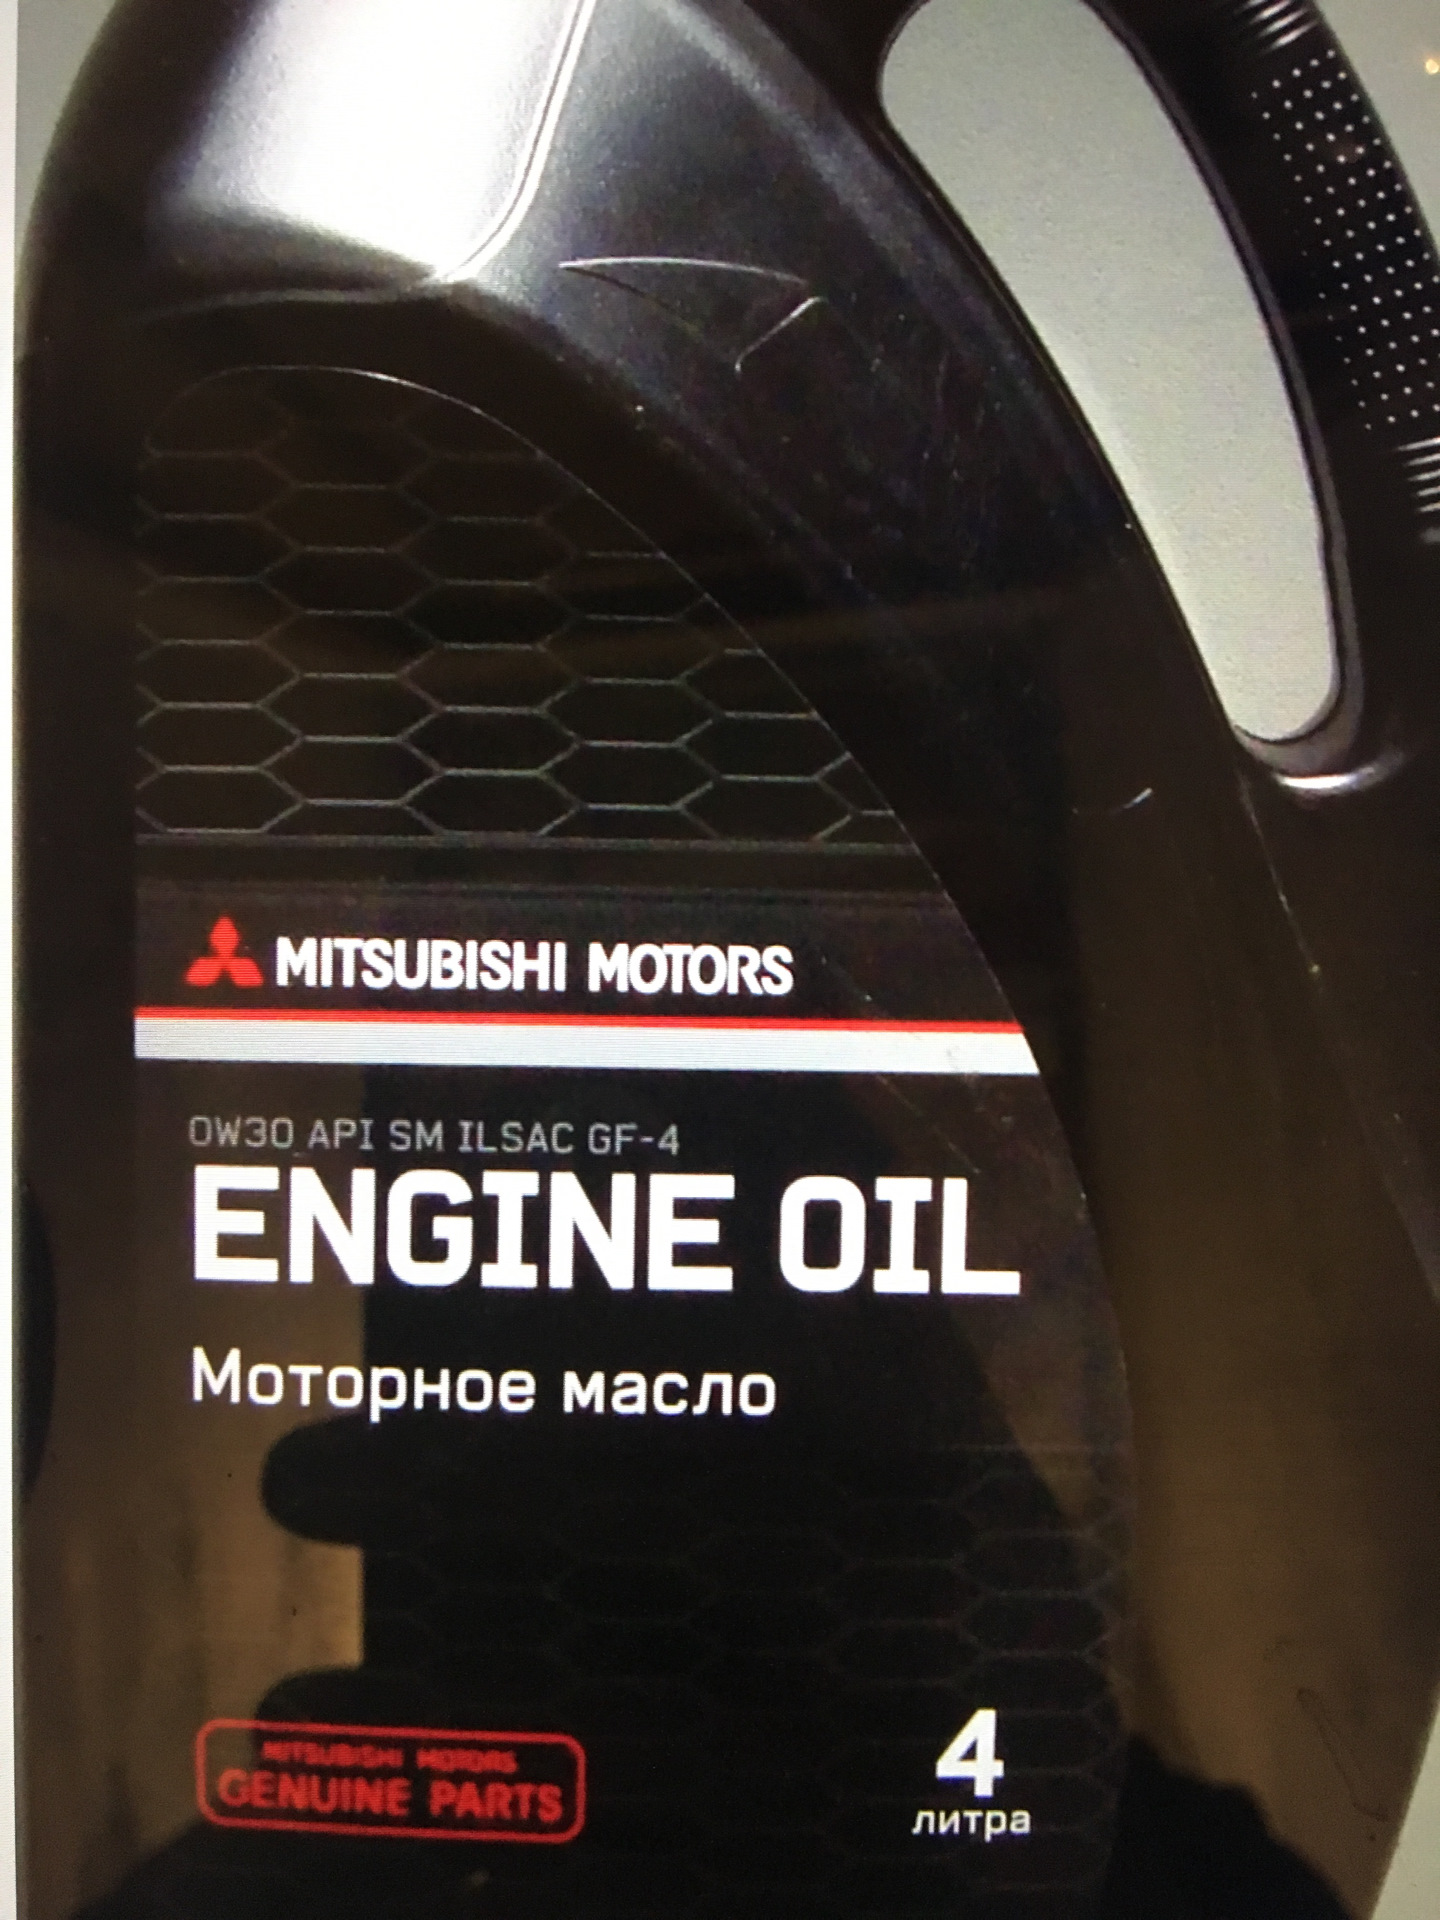 Моторное масло лансер 10. Масло моторное Mitsubishi 0w30. Моторное масло Mitsubishi синтетика 0w30. Моторное масло для Мицубиси Лансер 10. Engine Oil моторное масло Митсубиси 4 литра.